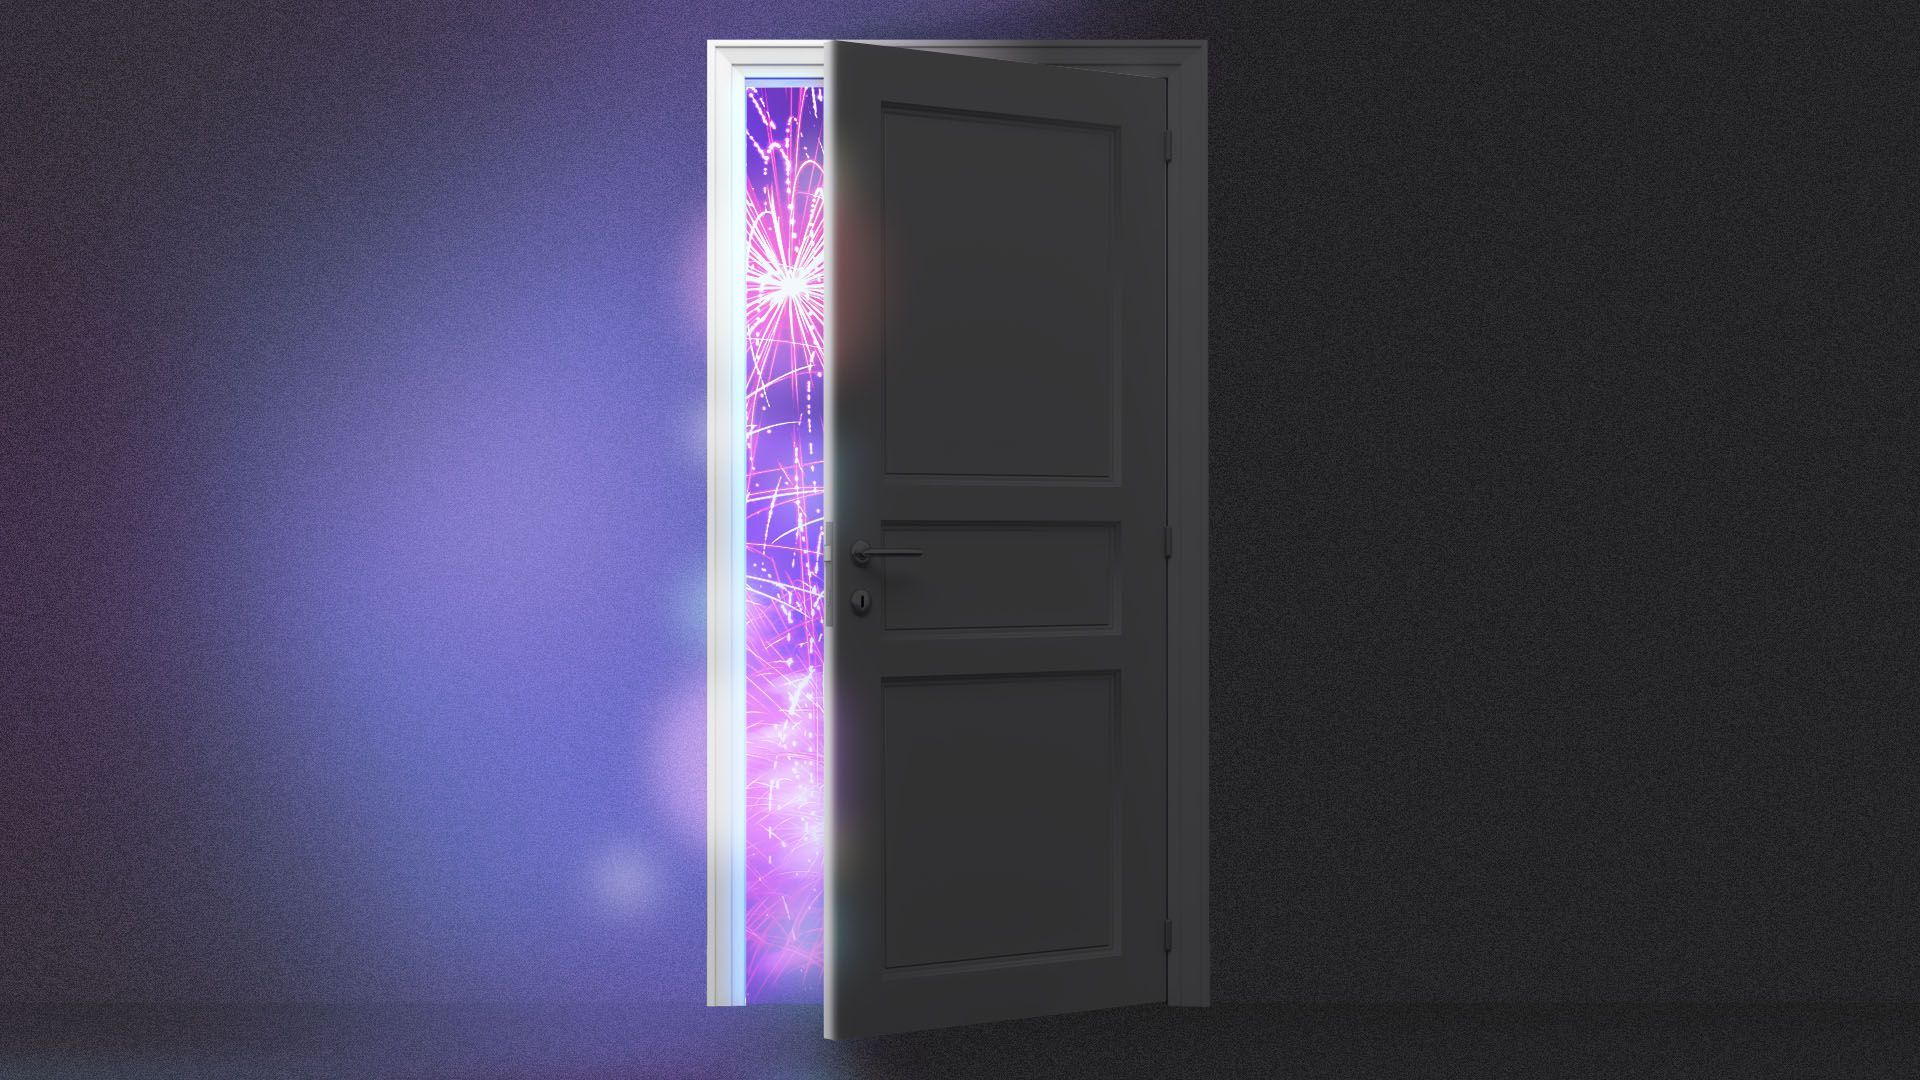 Illustration of an open door revealing fireworks